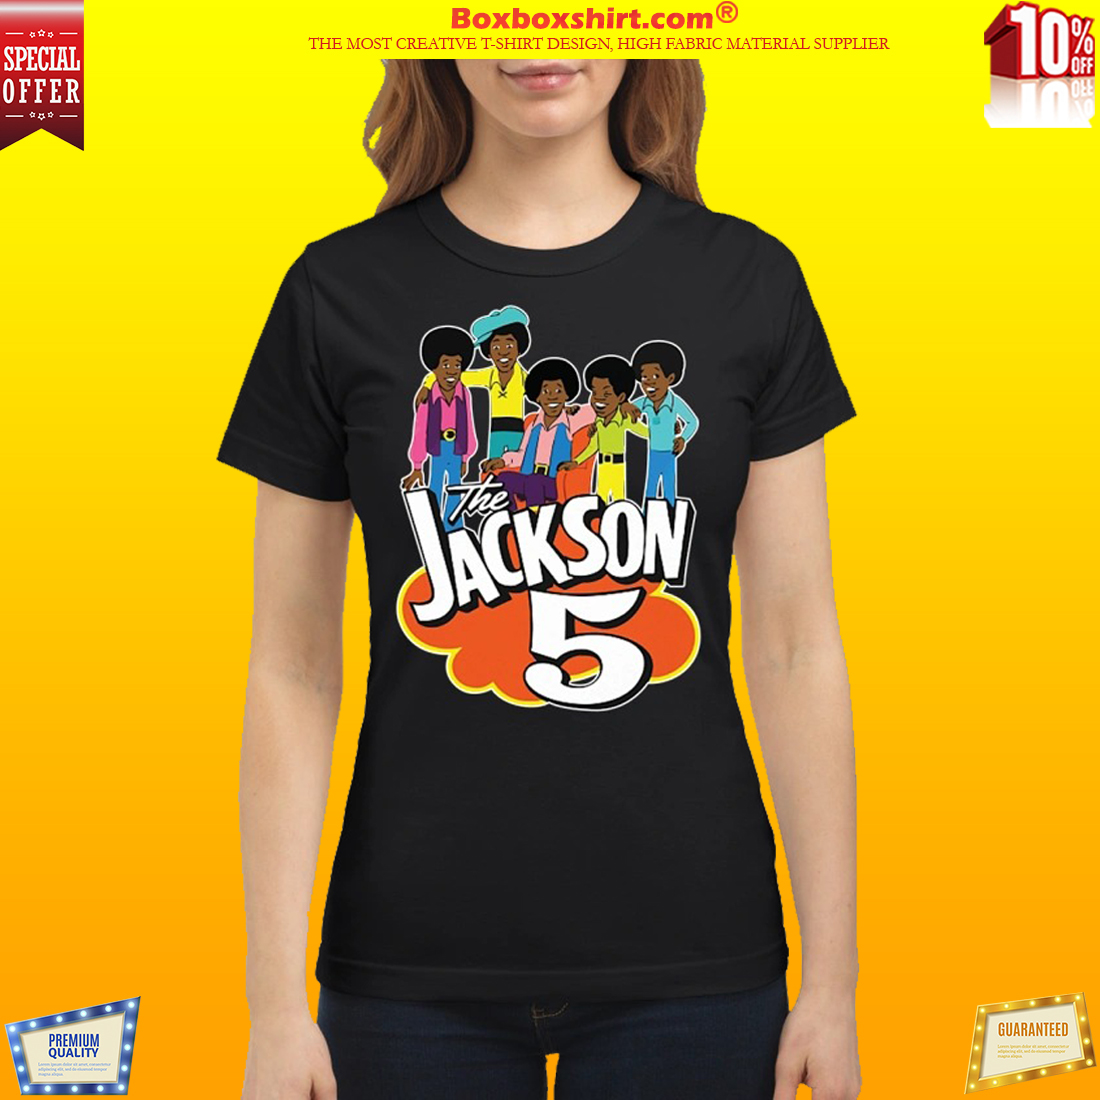 The Jackson 5 cartoon vintage retro t classic shirt